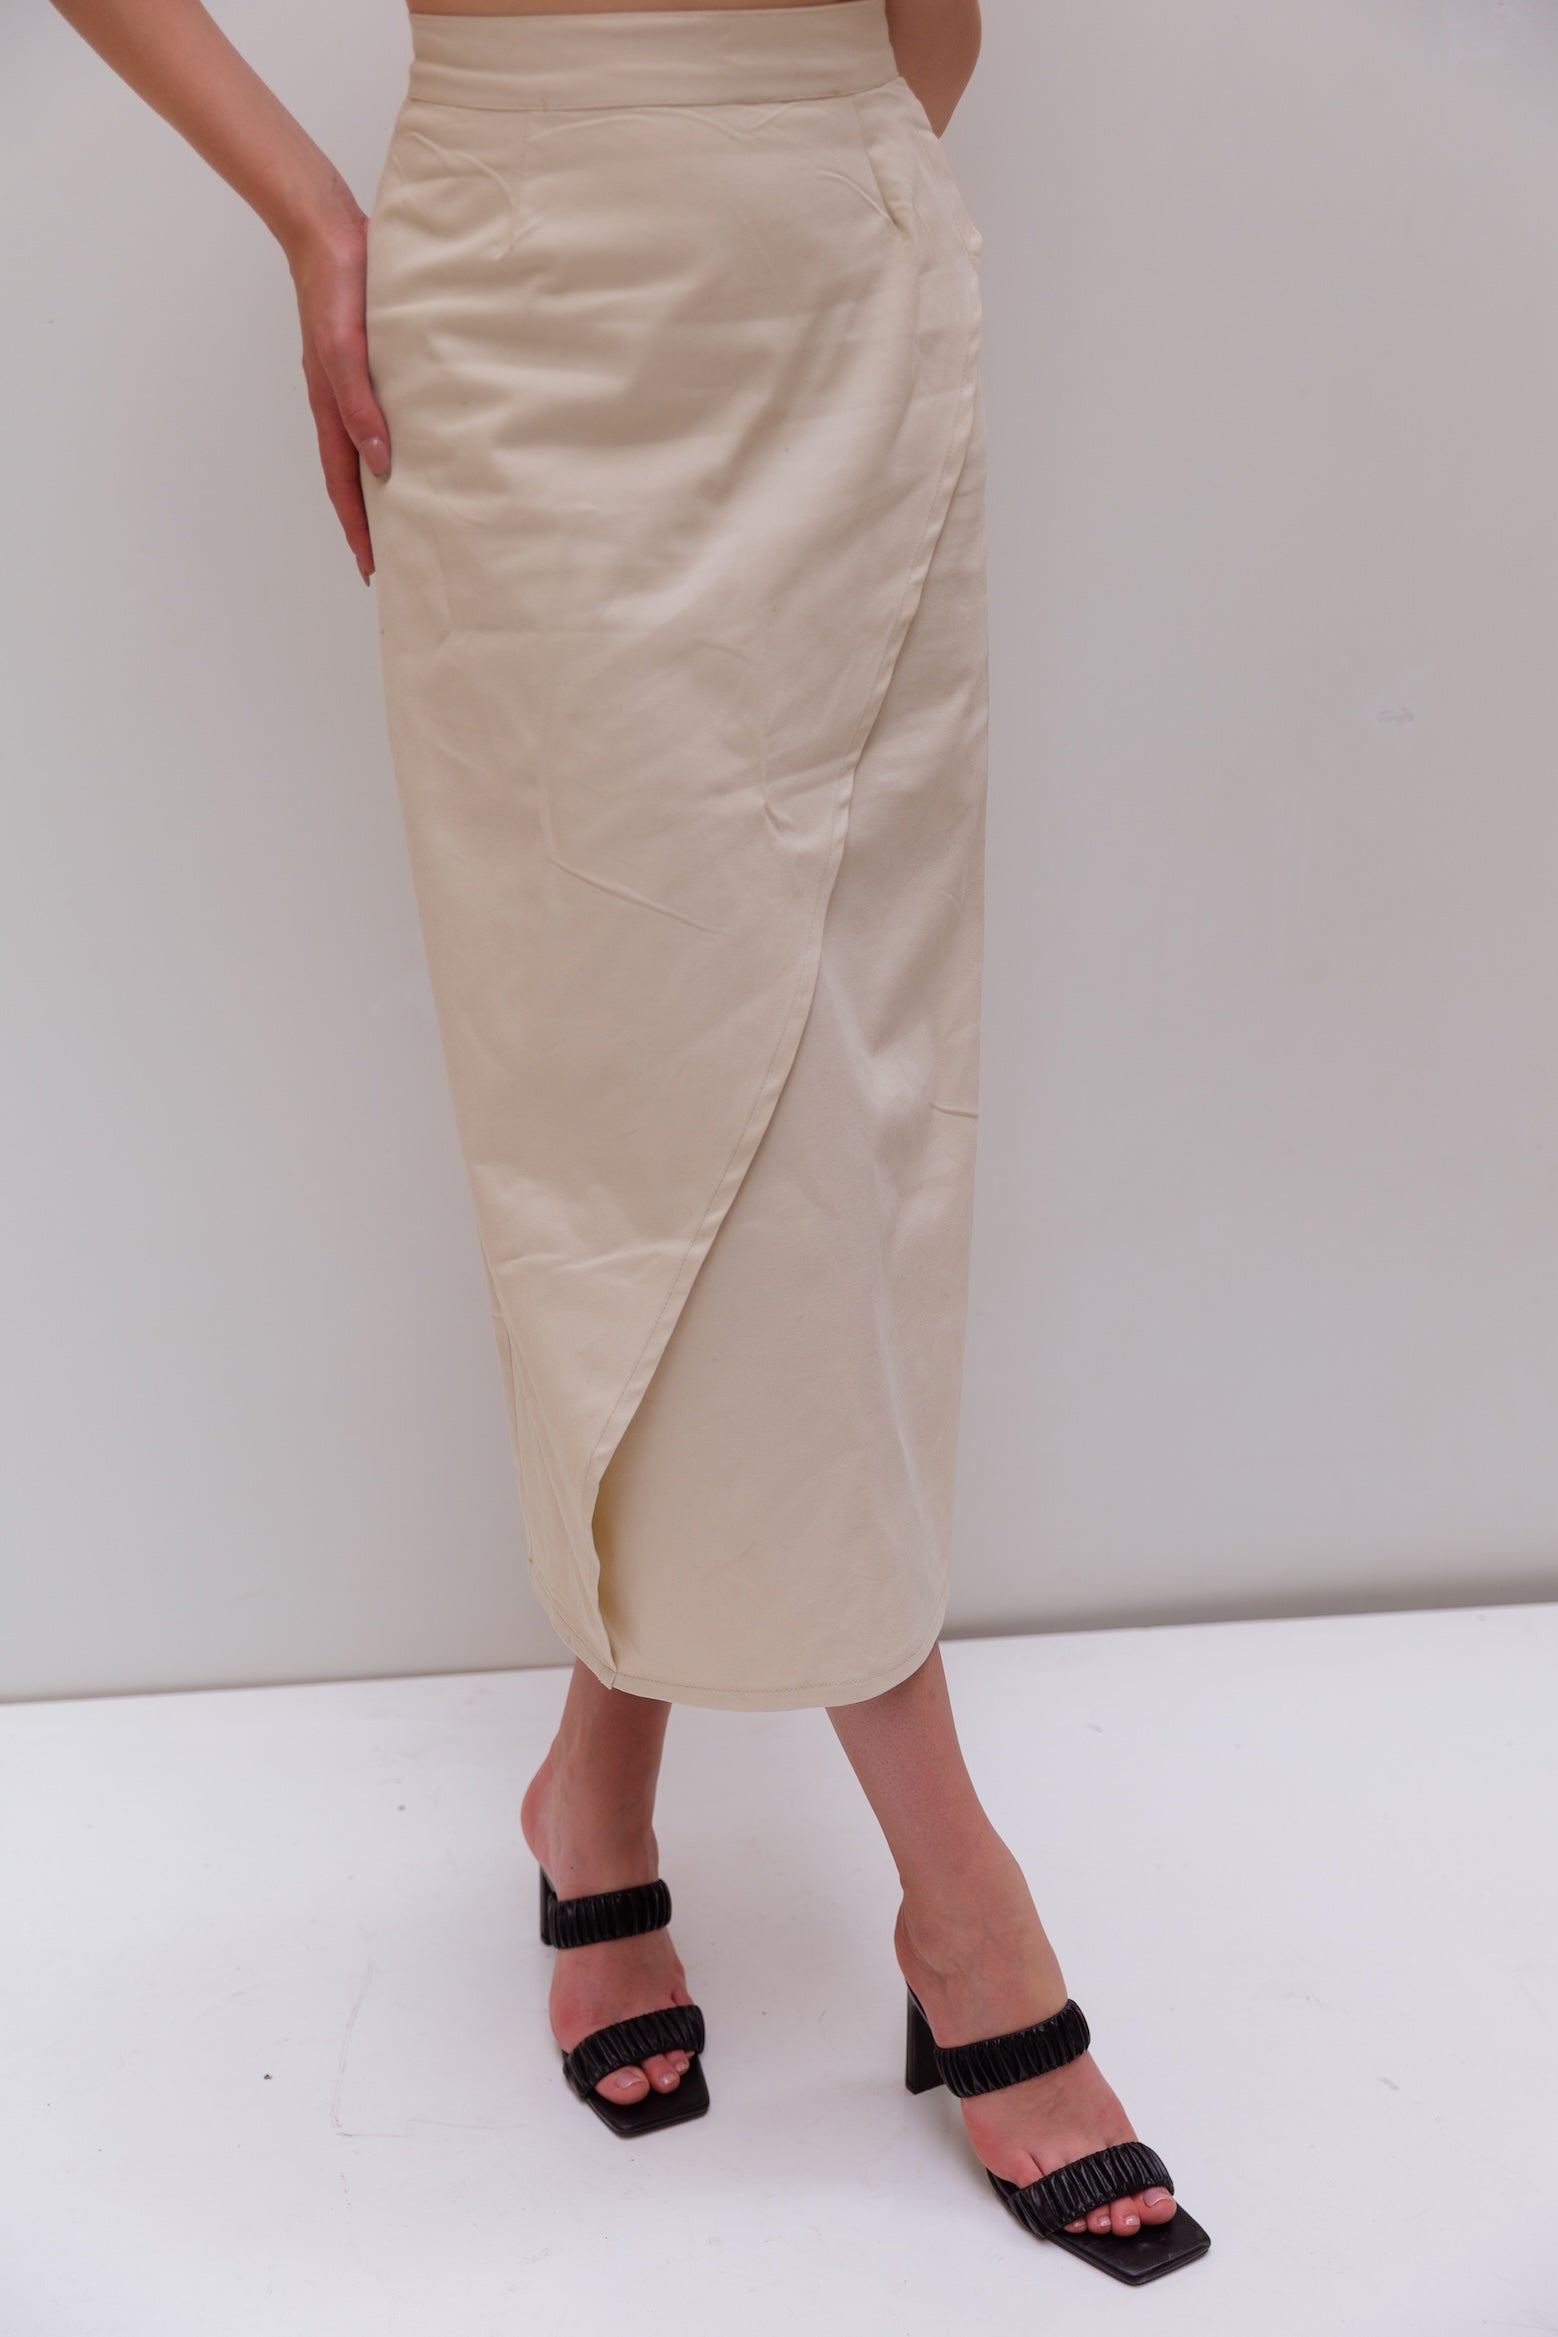 Criss cross maxi skirt in beige